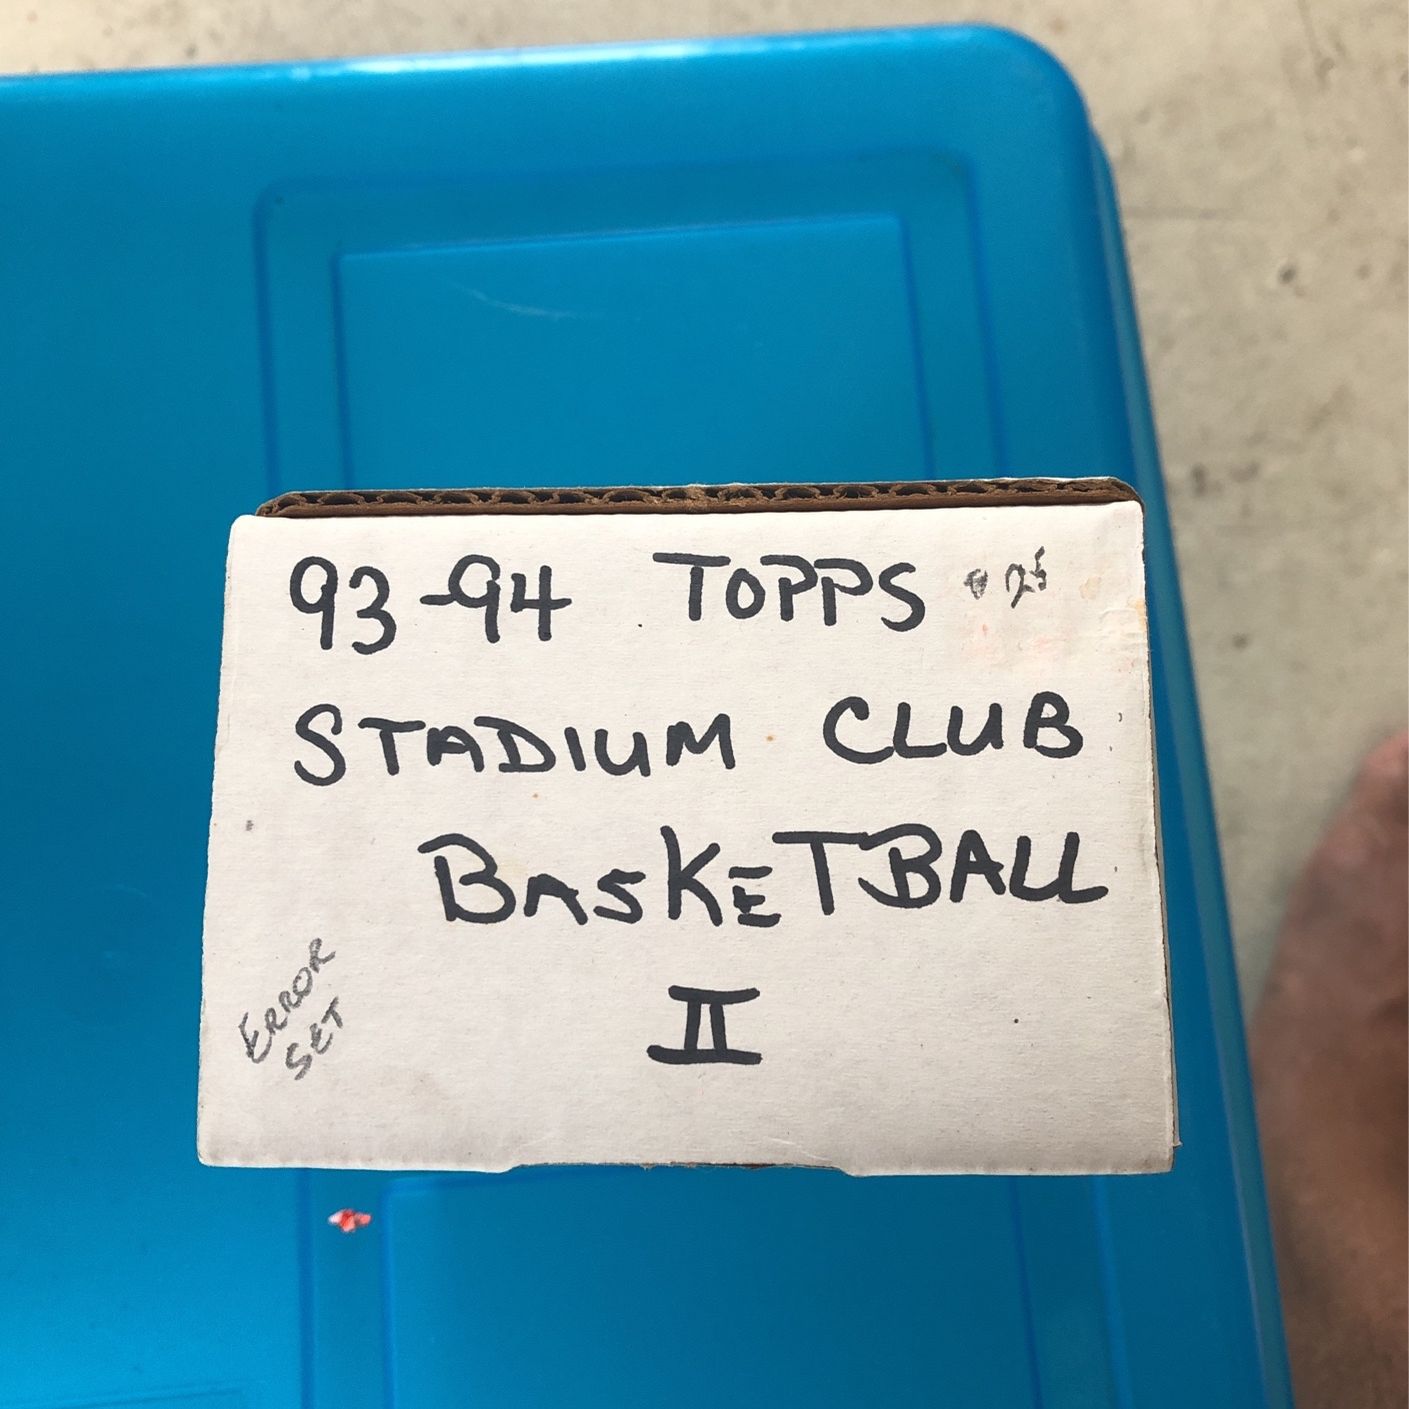 1993/94 tops stadium club basketball set 2